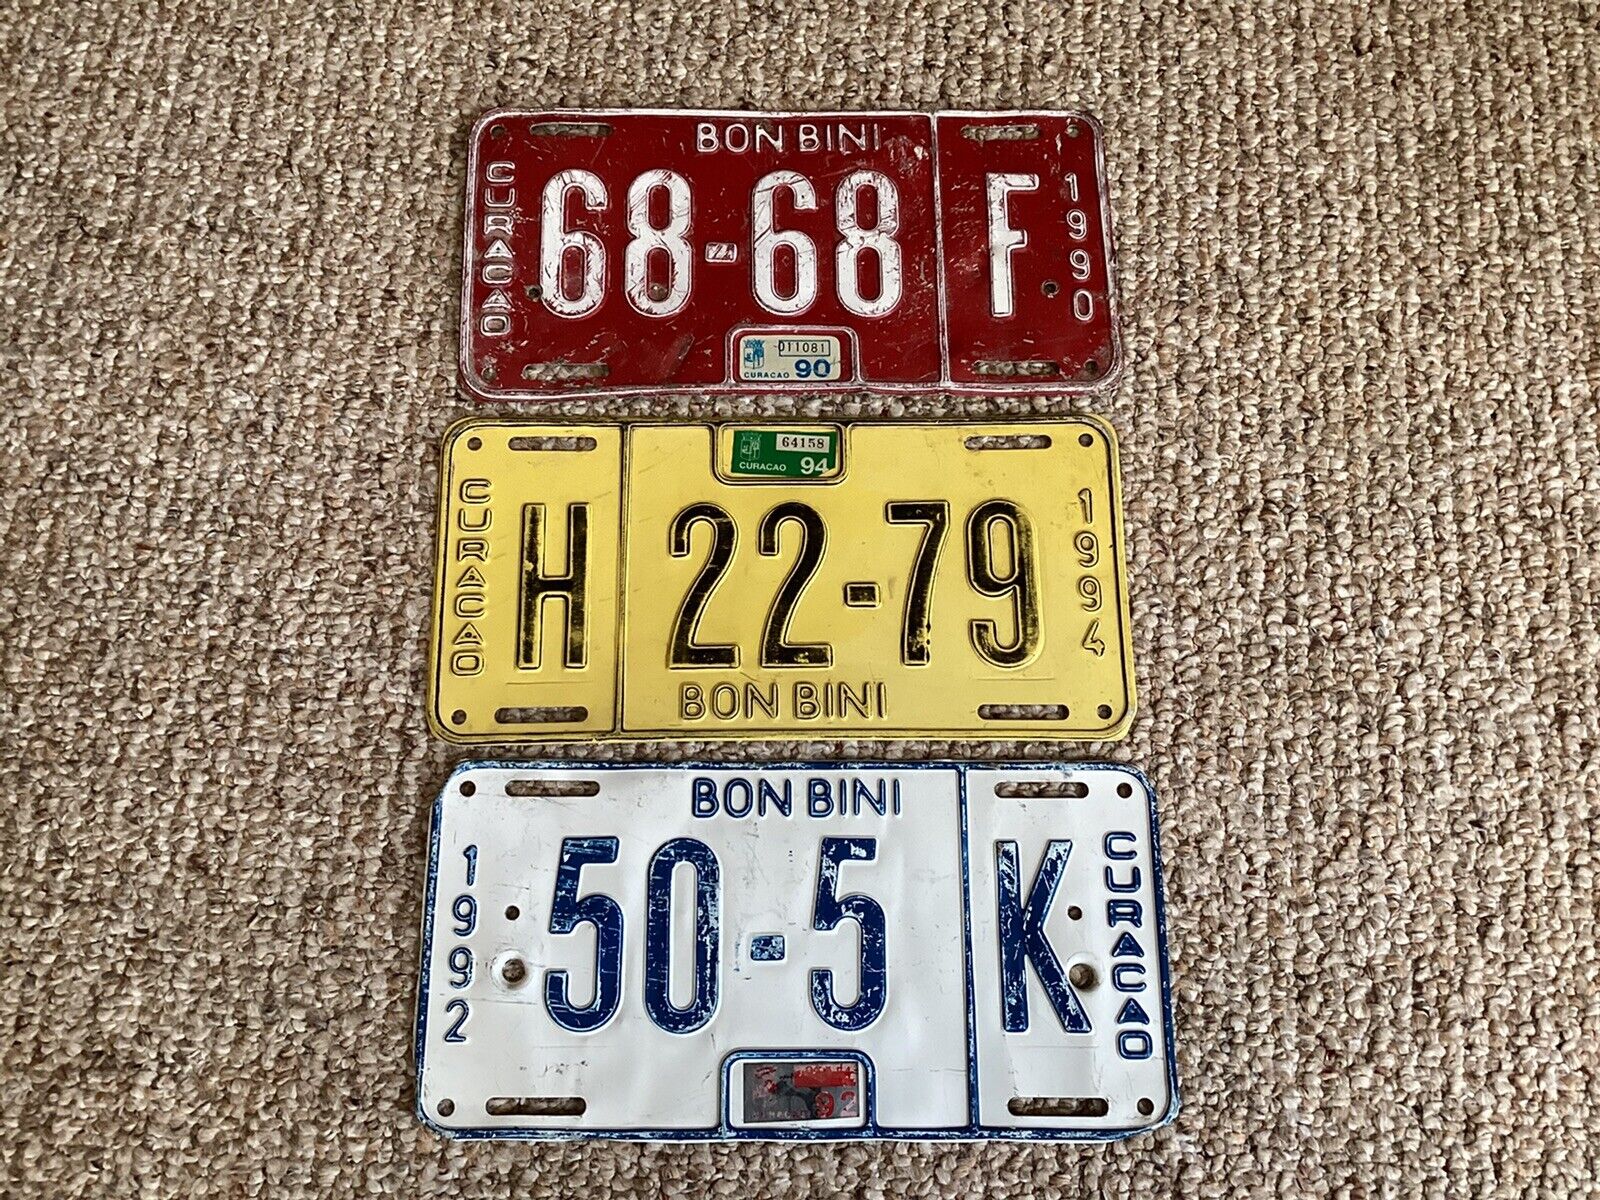 1990,92, 94 Curacao license plates